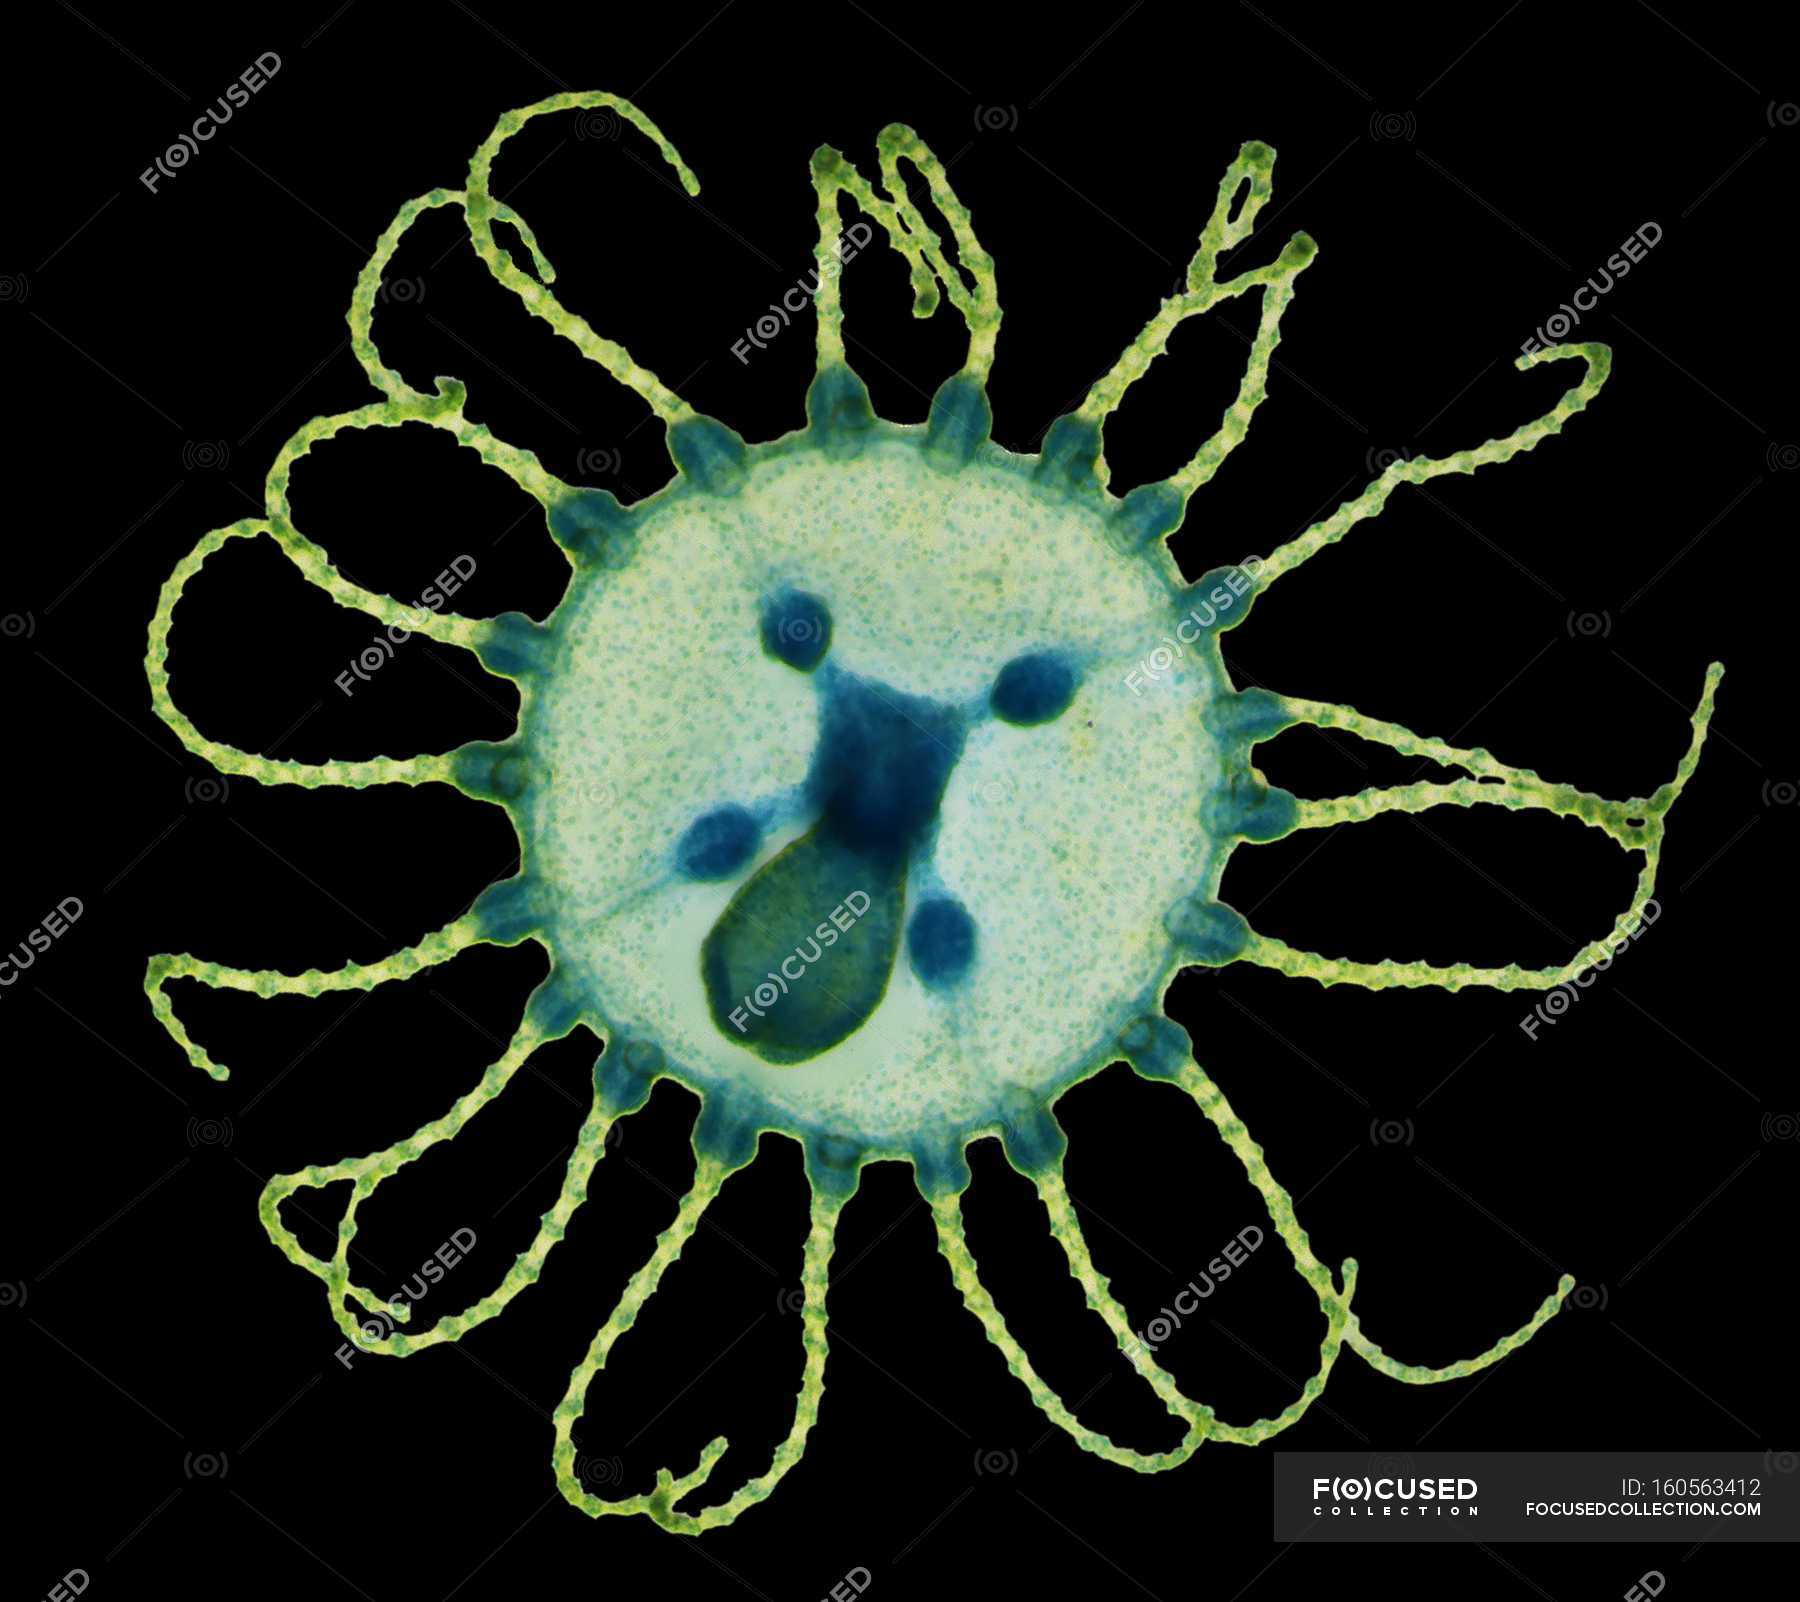 Obelia hydrozoan medusa. Light micrograph (LM) of a medusa (young ...